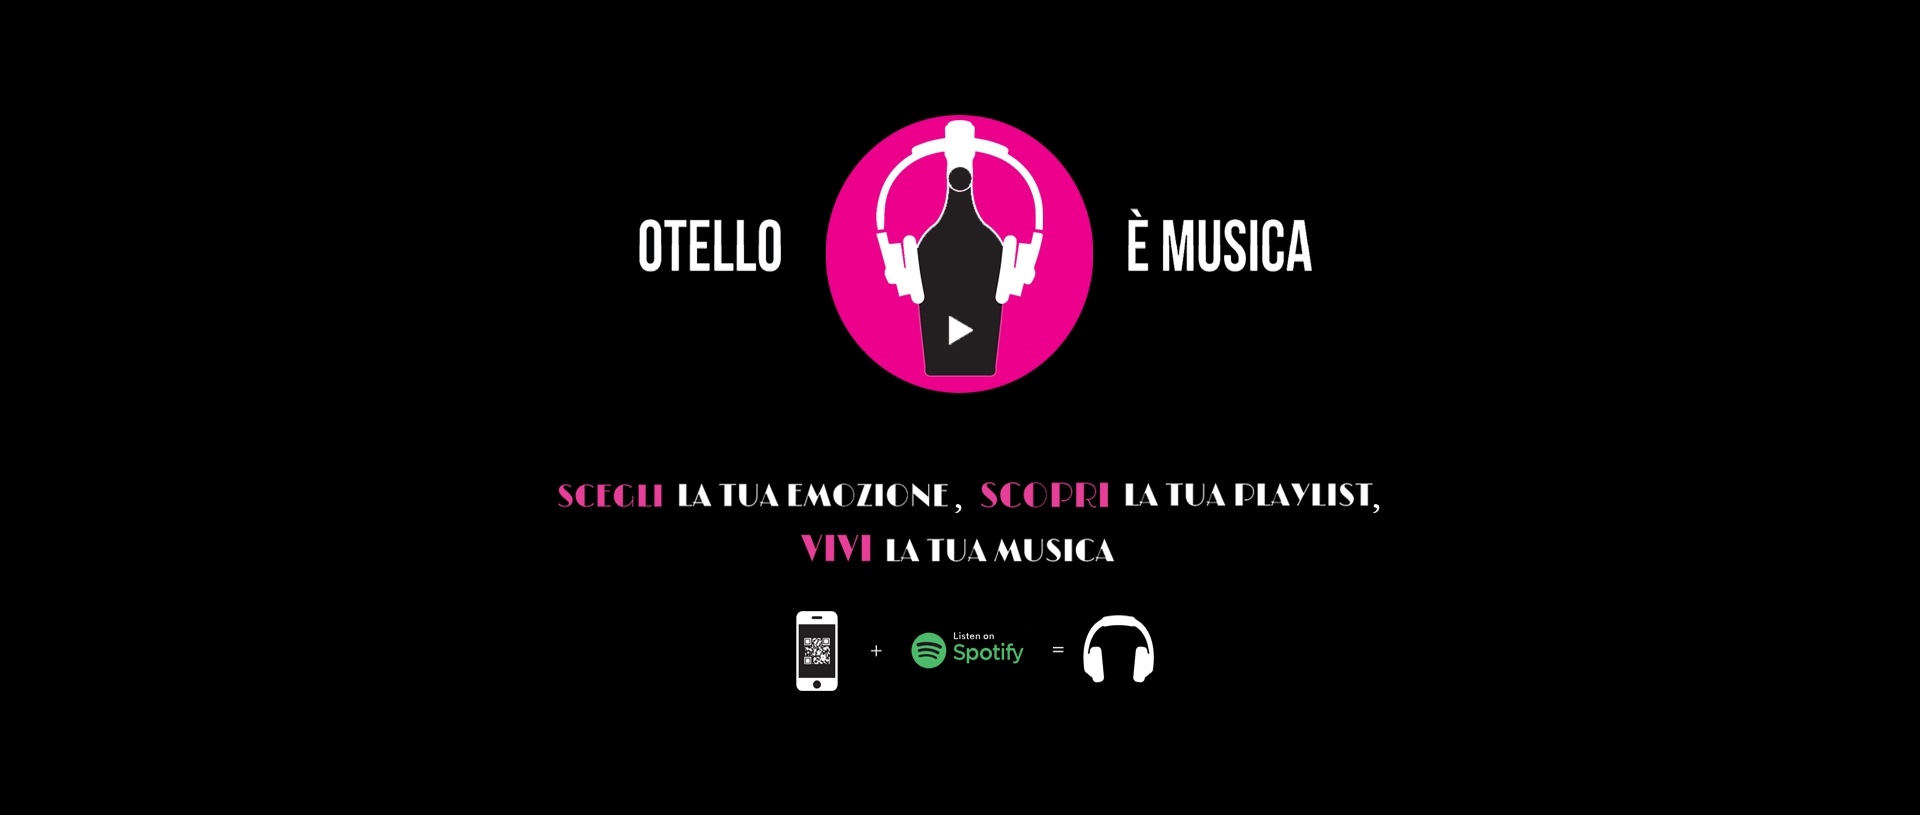 otello_spotify